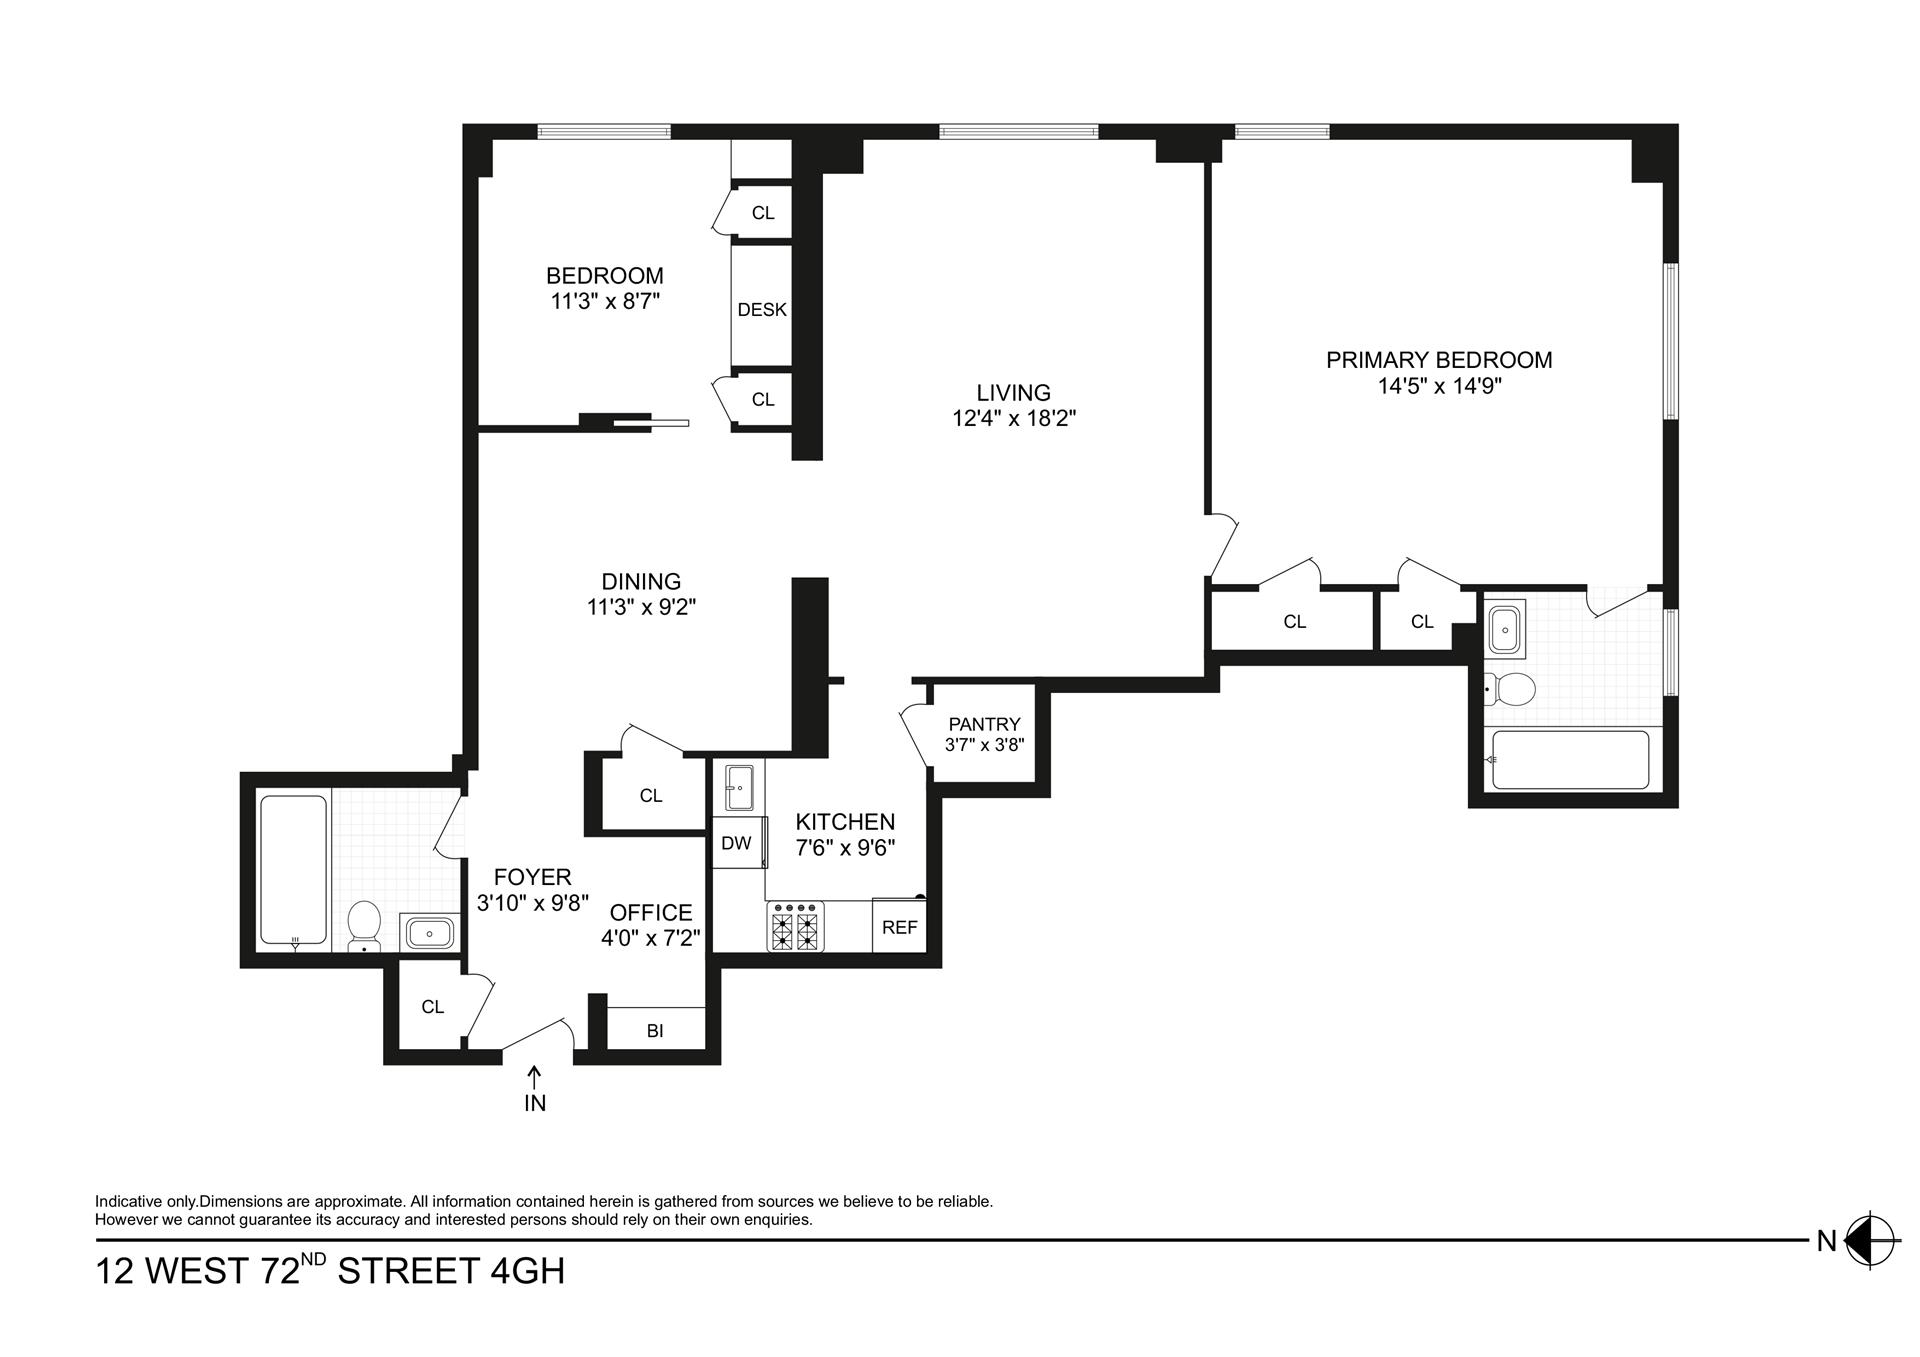 Floorplan for 12 West 72nd Street, 4GH